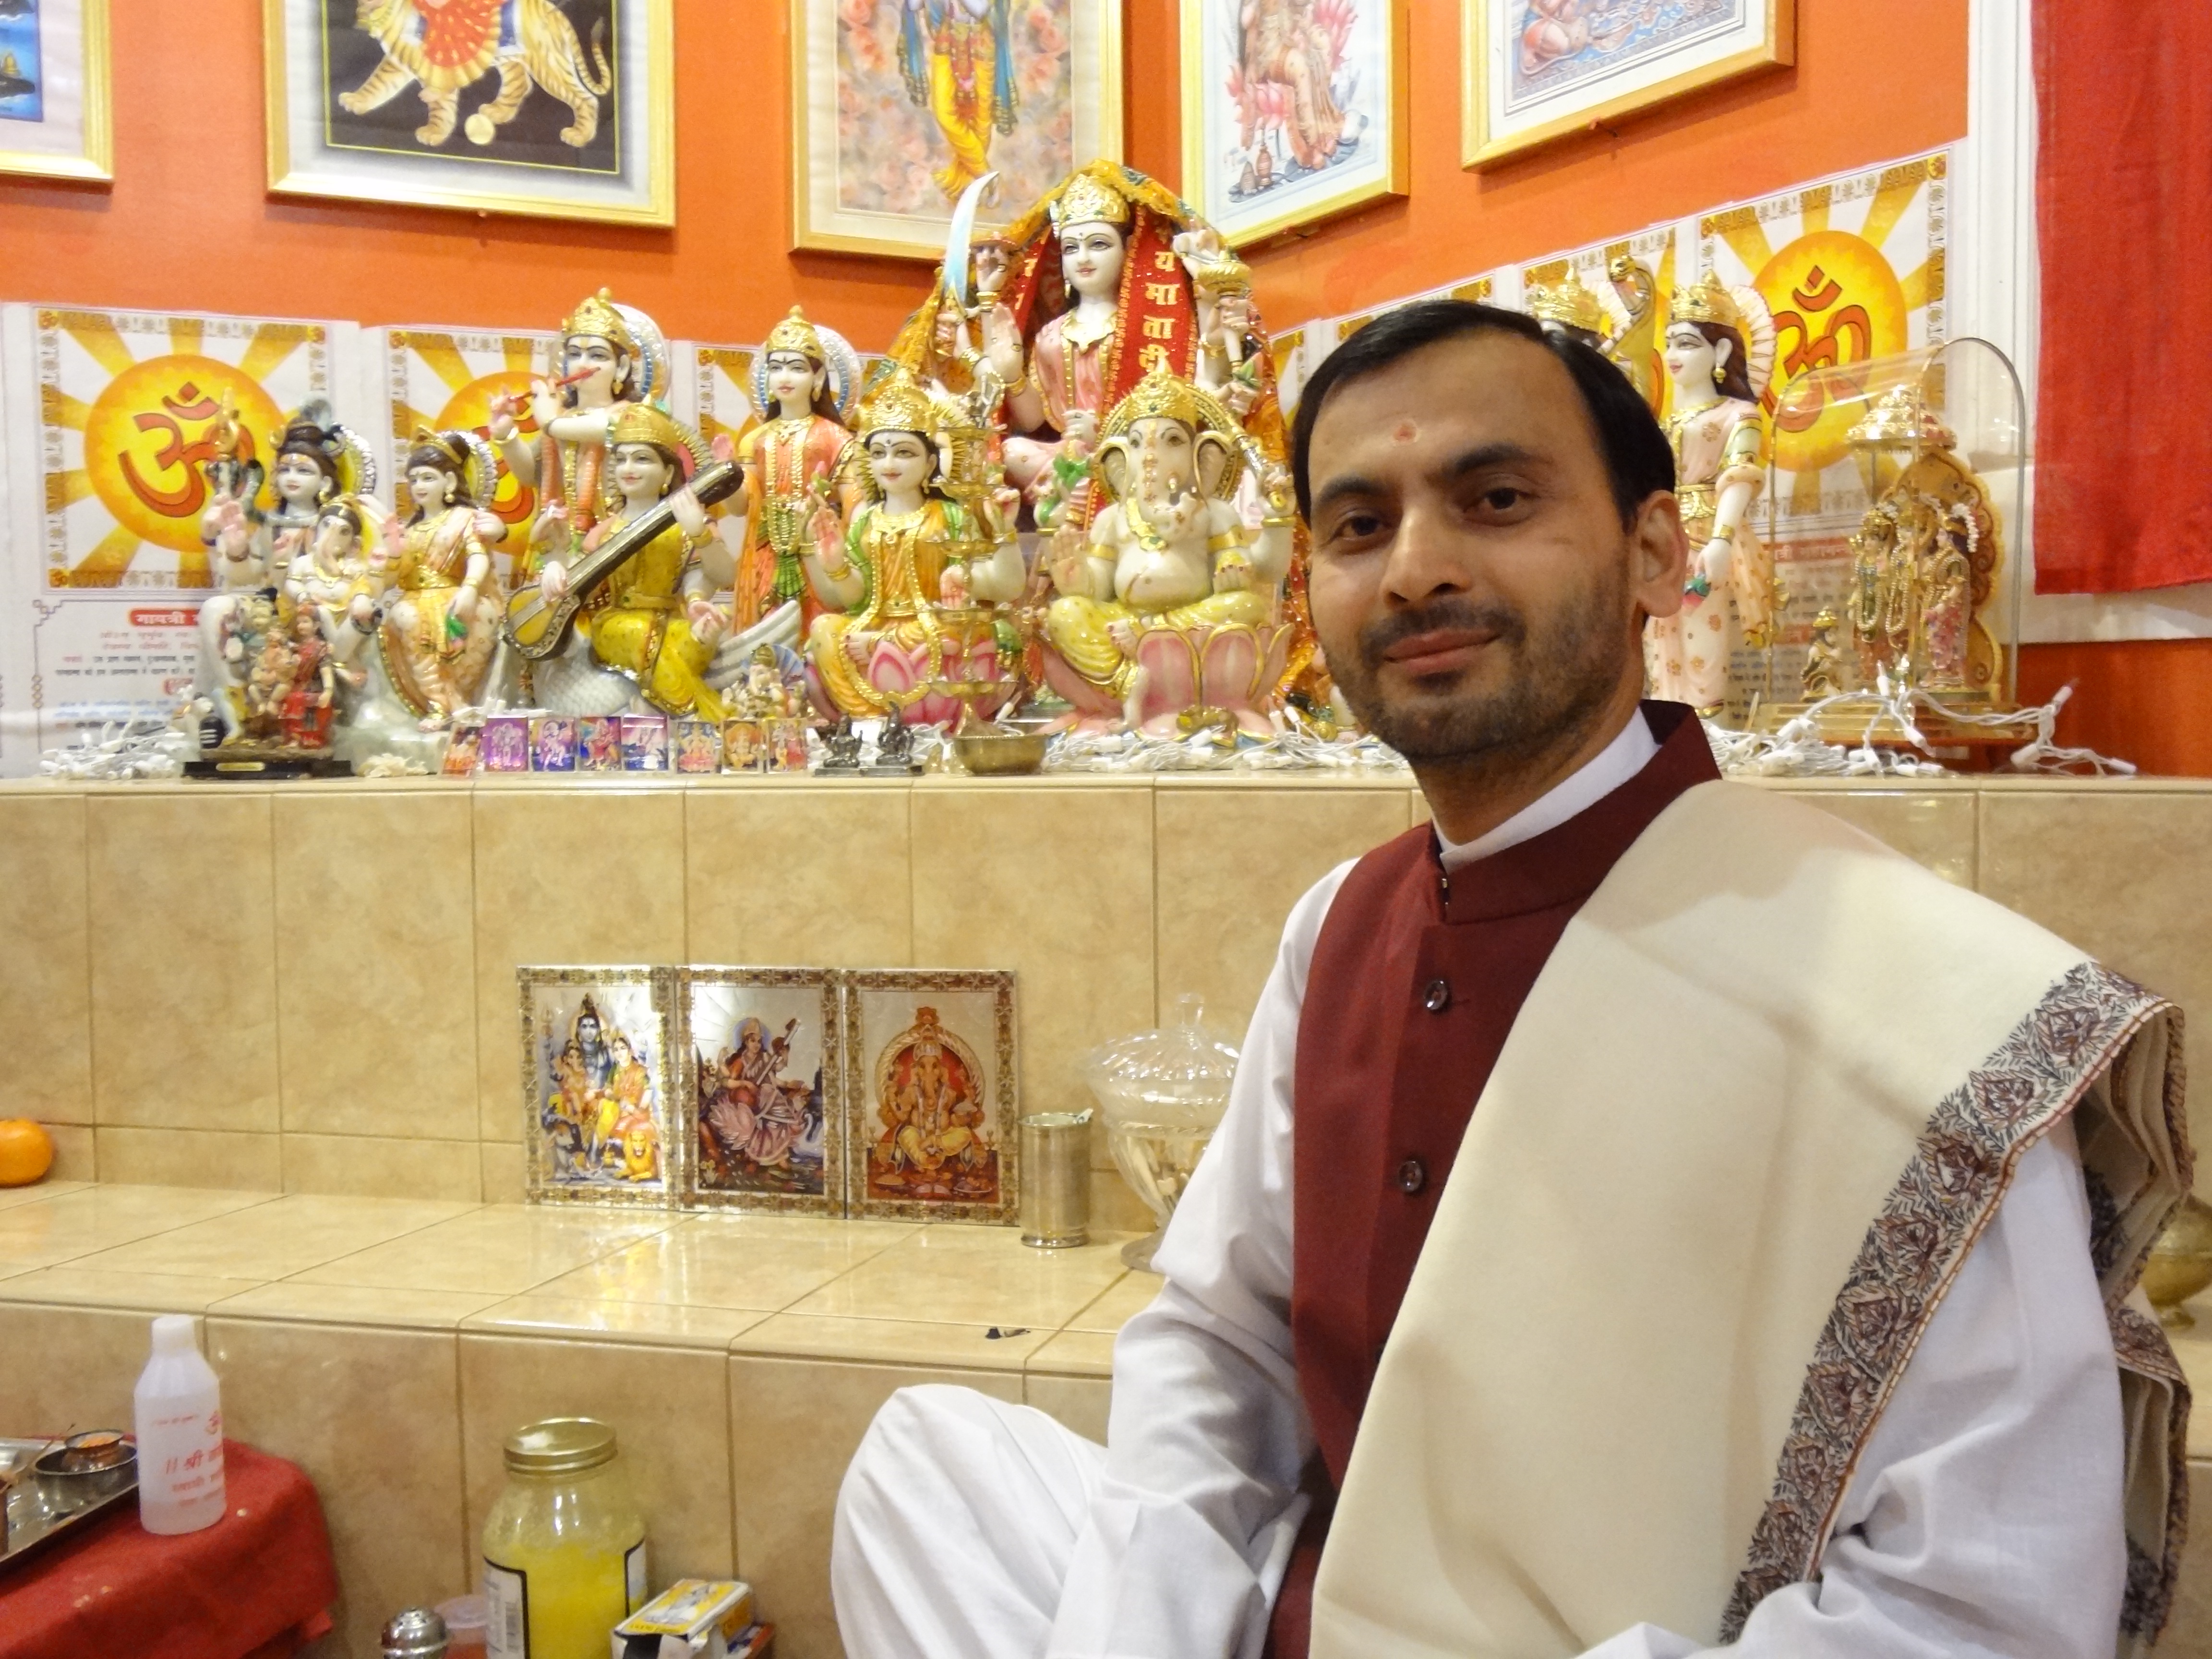 Hindu Pandit Harish Sharma picture with Hindu Deities